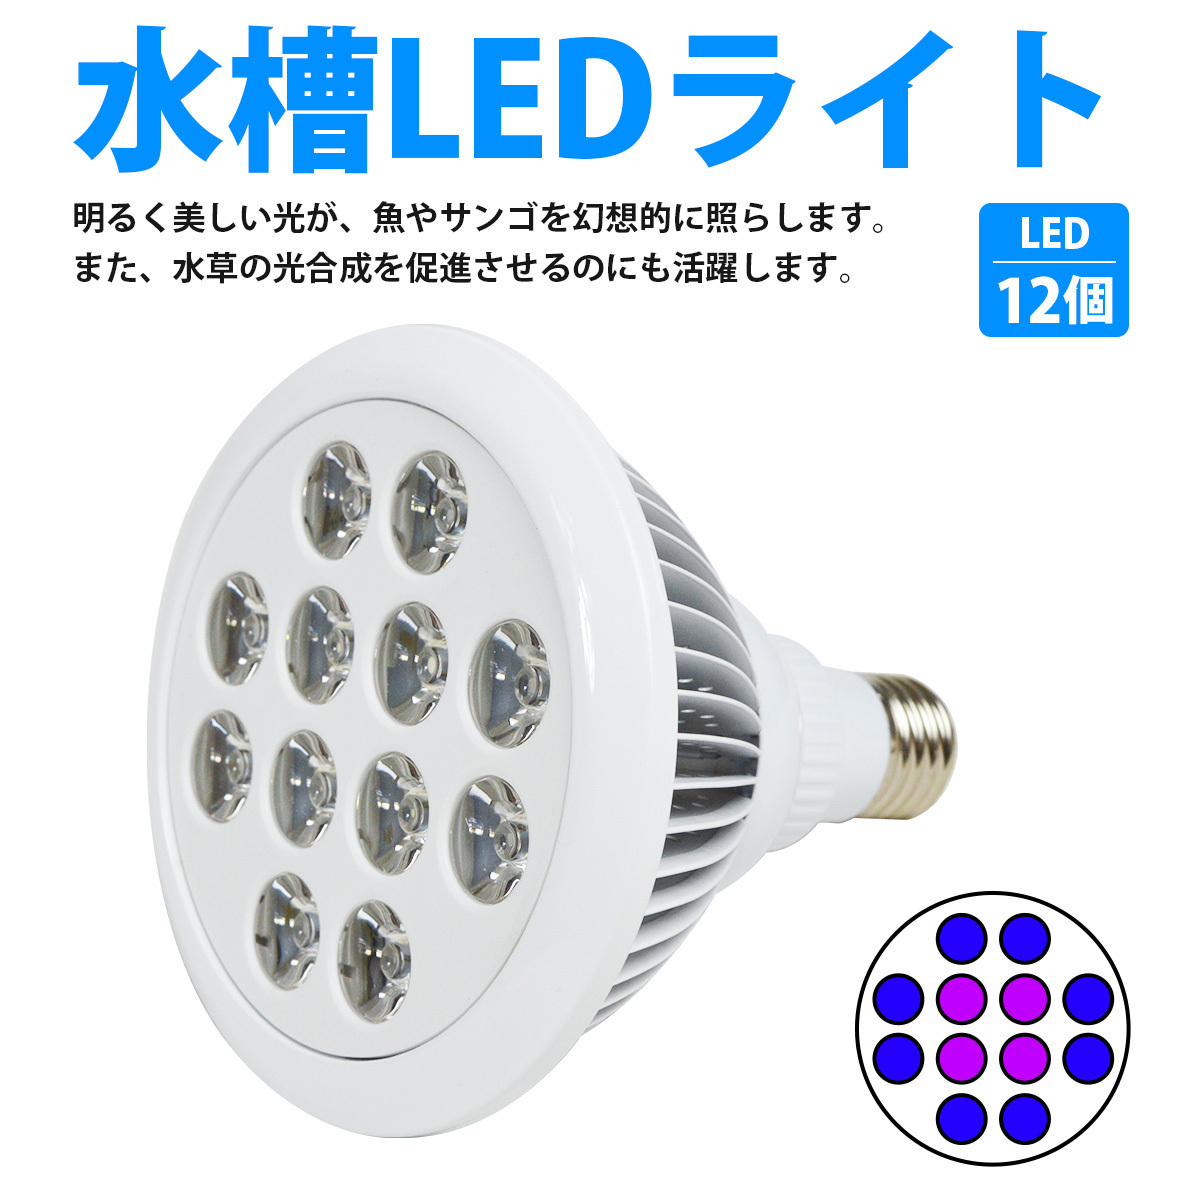 LED 電球 スポットライト 24W(2W×12)青8紫外線4灯 水槽照明 E26 LEDスポットライト 電気 水草 サンゴ 熱帯魚 観賞魚 植物育成_laqua-b-017-wh-01-a